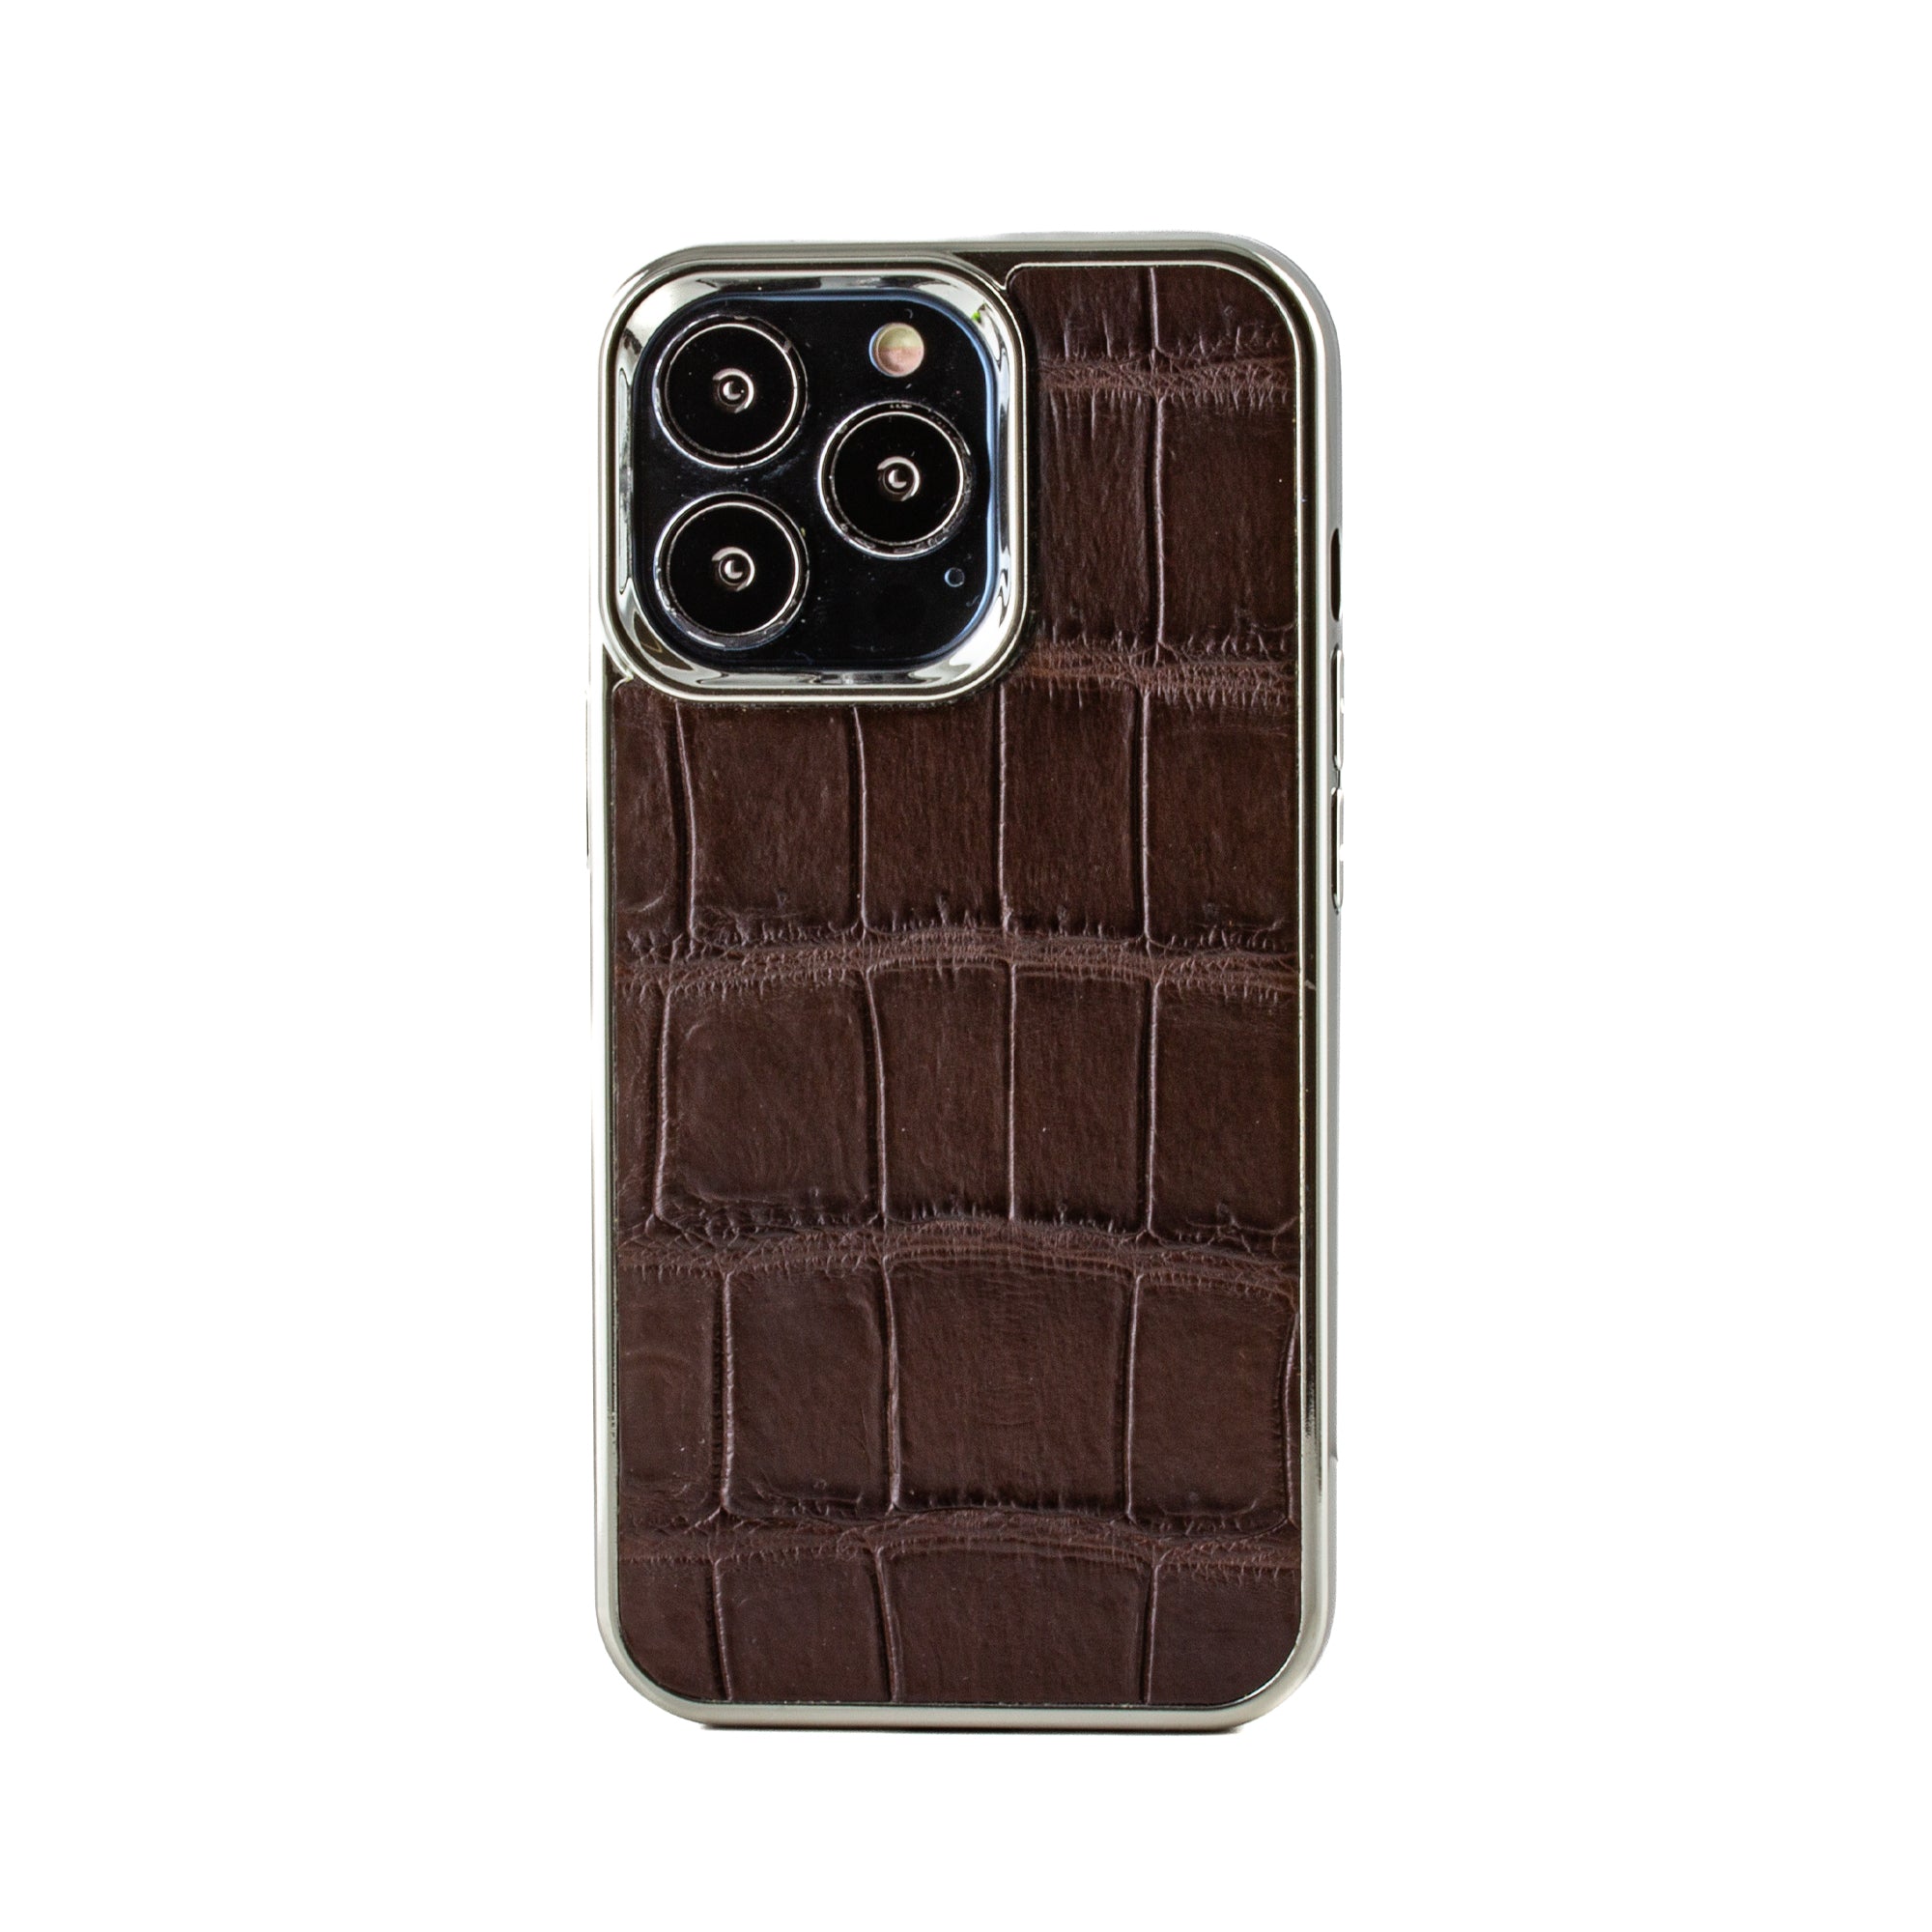 Vente exclusive - Coque "Sport case" cuir pour iPhone 13 Pro - Alligator marron